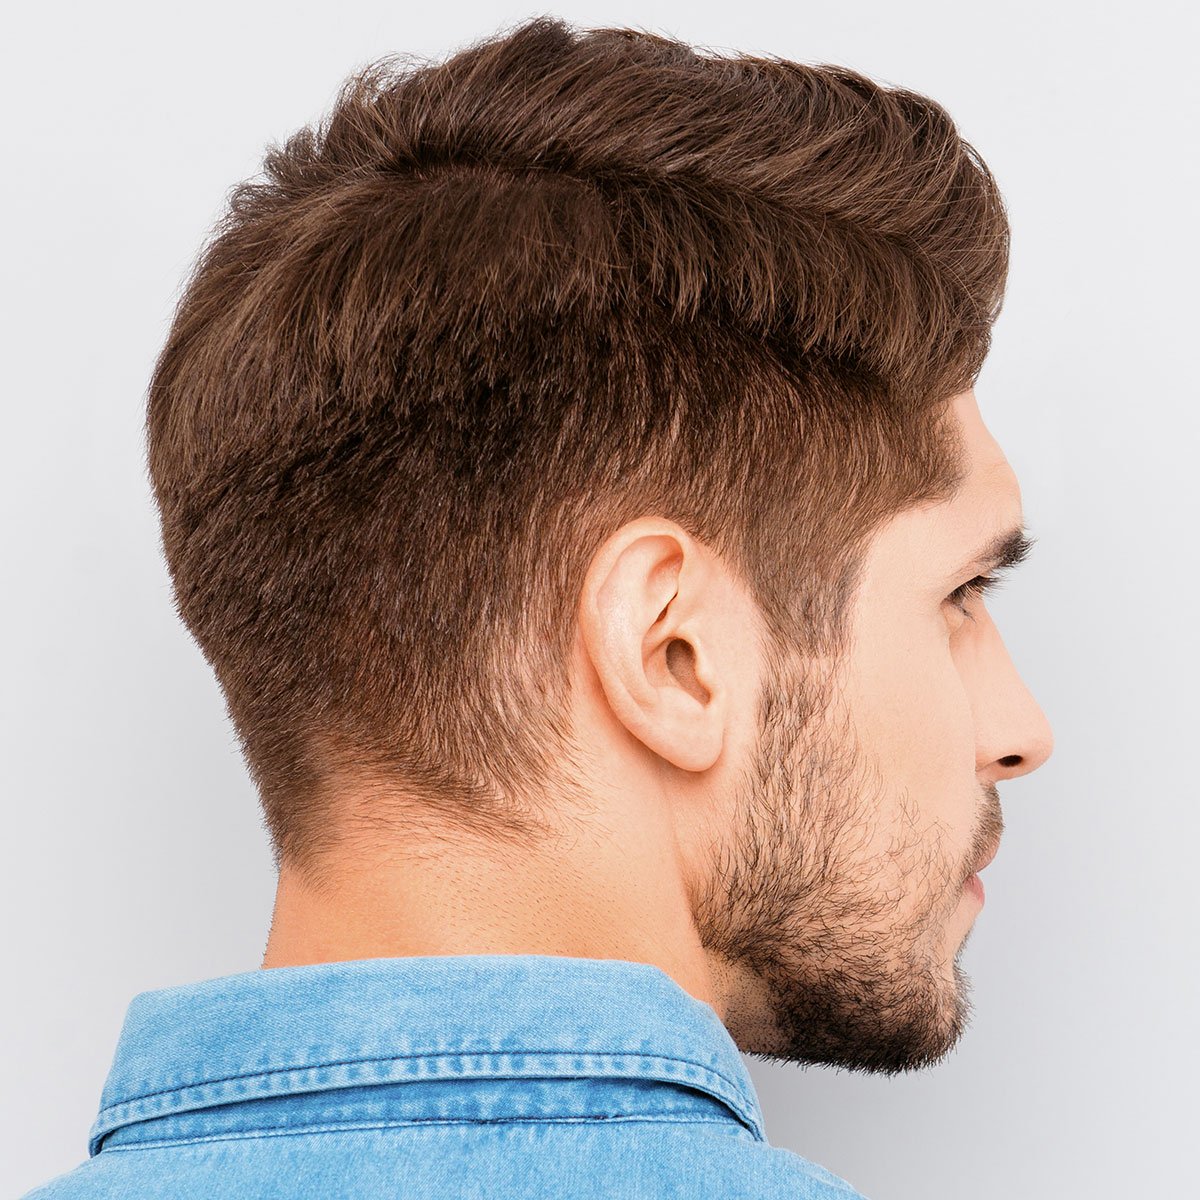 5 best hairstyles for men - Next Level Gents | Haircuts for balding men,  Haircuts for men, Mens haircuts short